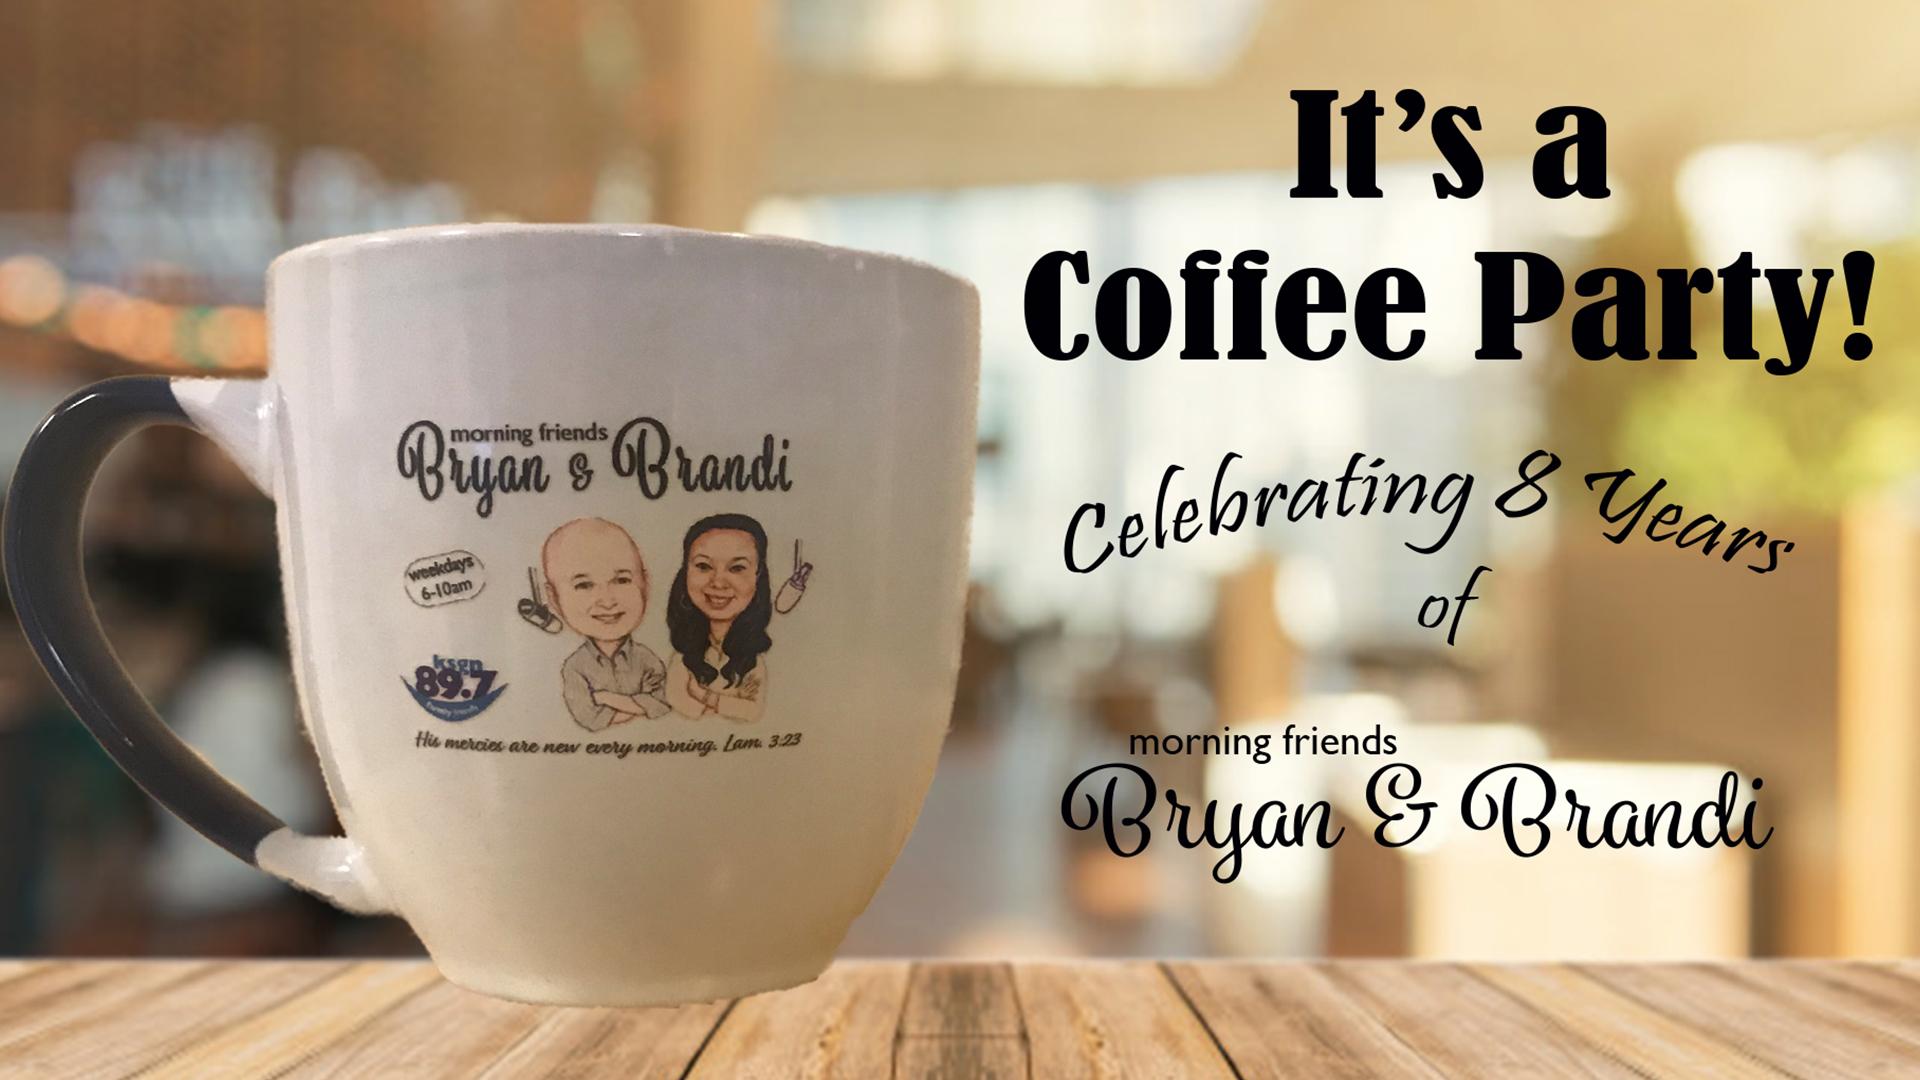 Coffee Part with Bryan & Brandi